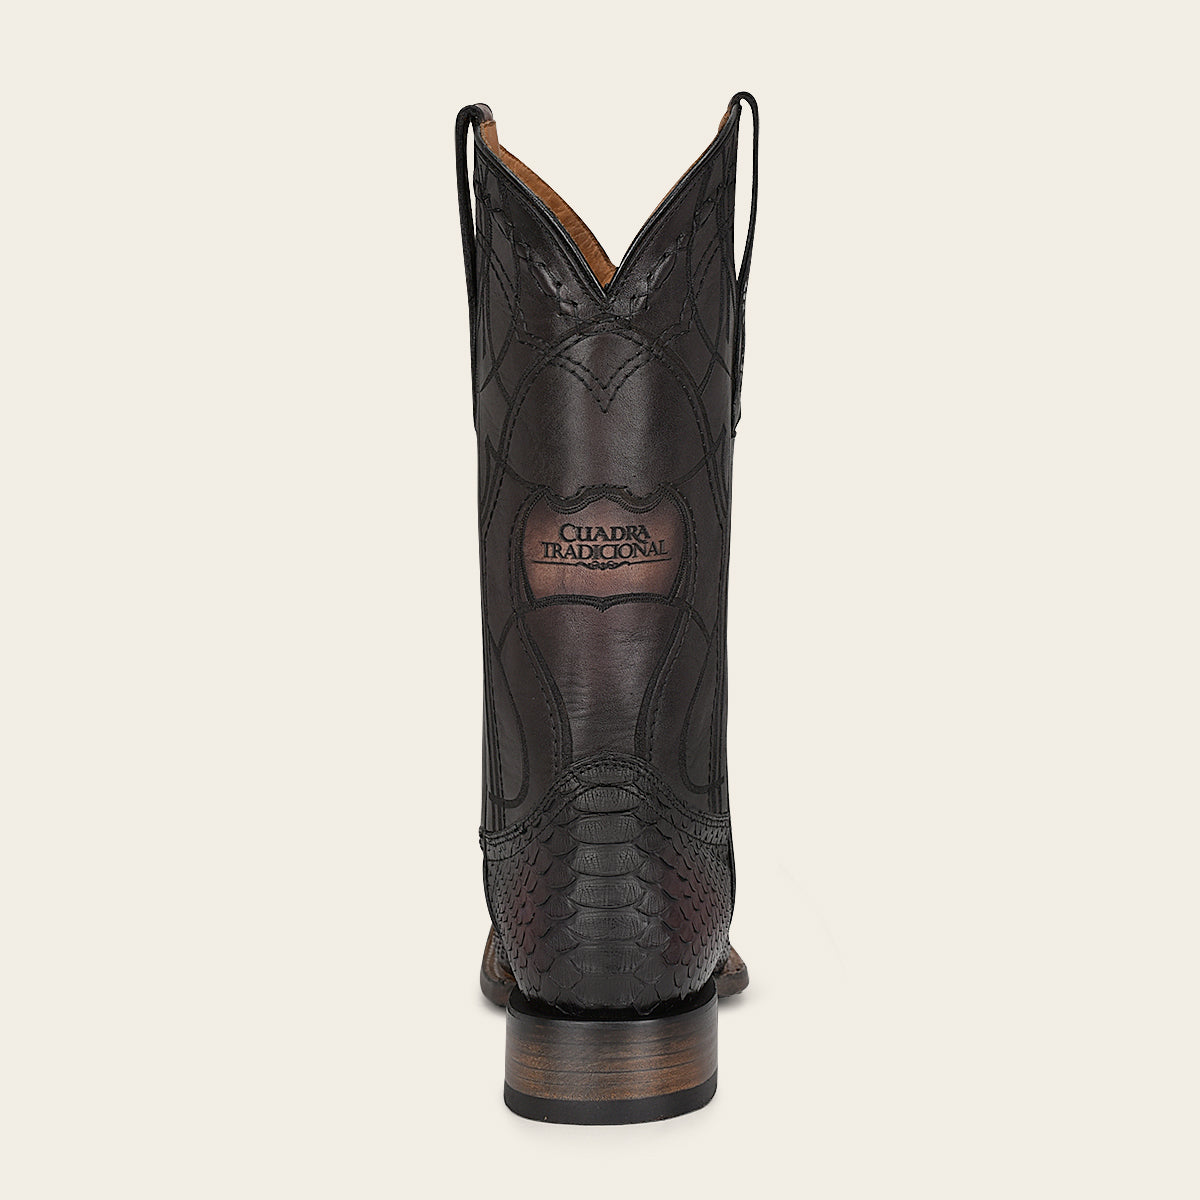 Engraved mahogany python leather western boot - 3Z2LPH - Cuadra Shop